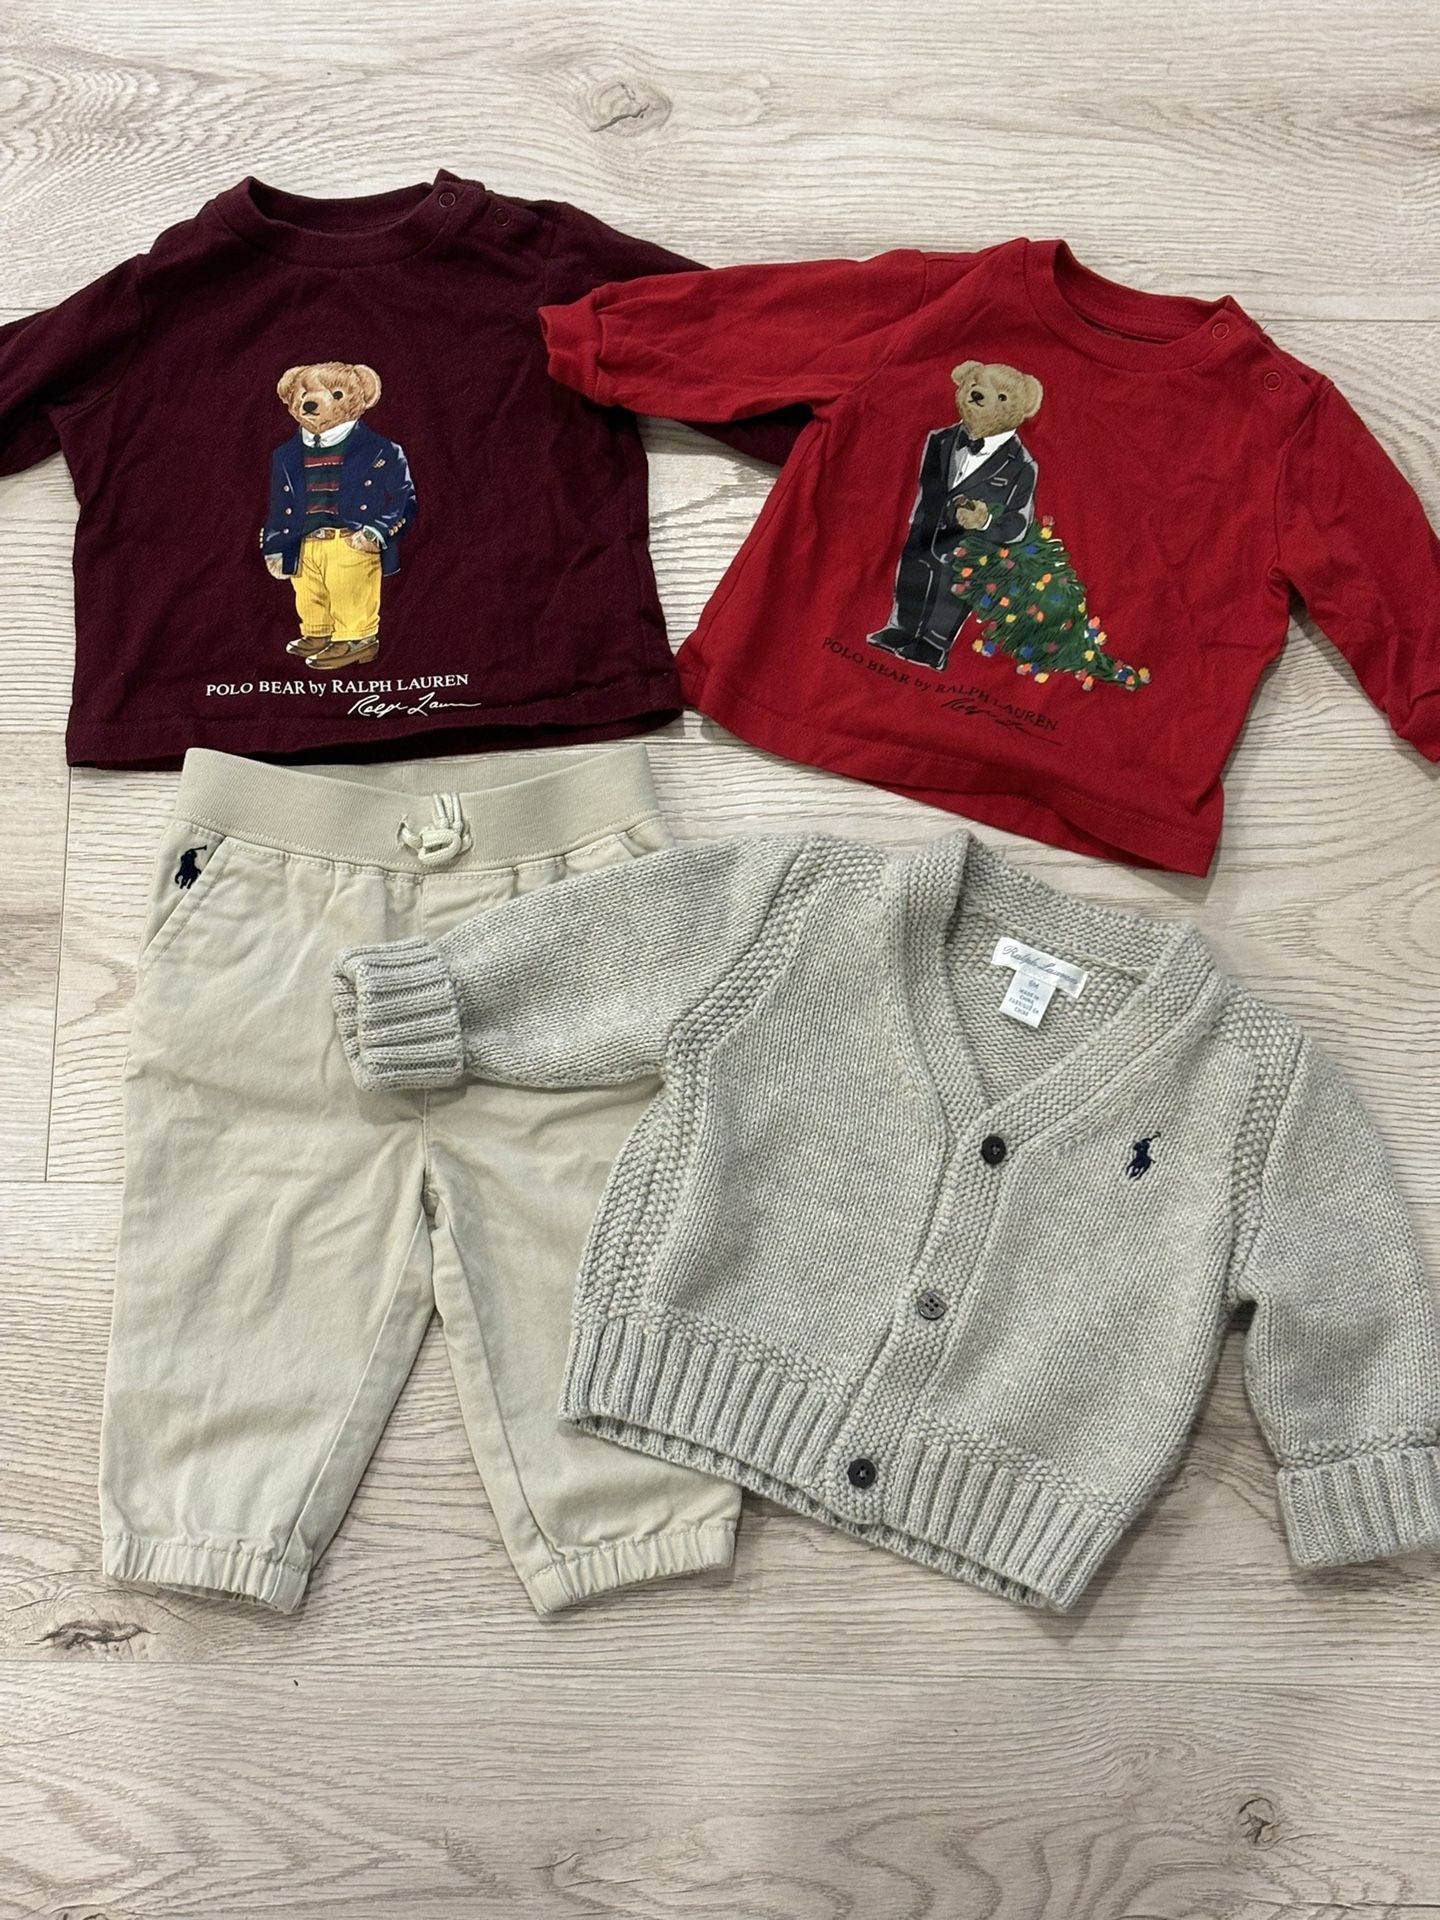 Baby Boy Clothes Ralph Lauren Baby Boy Outfit -6pcs